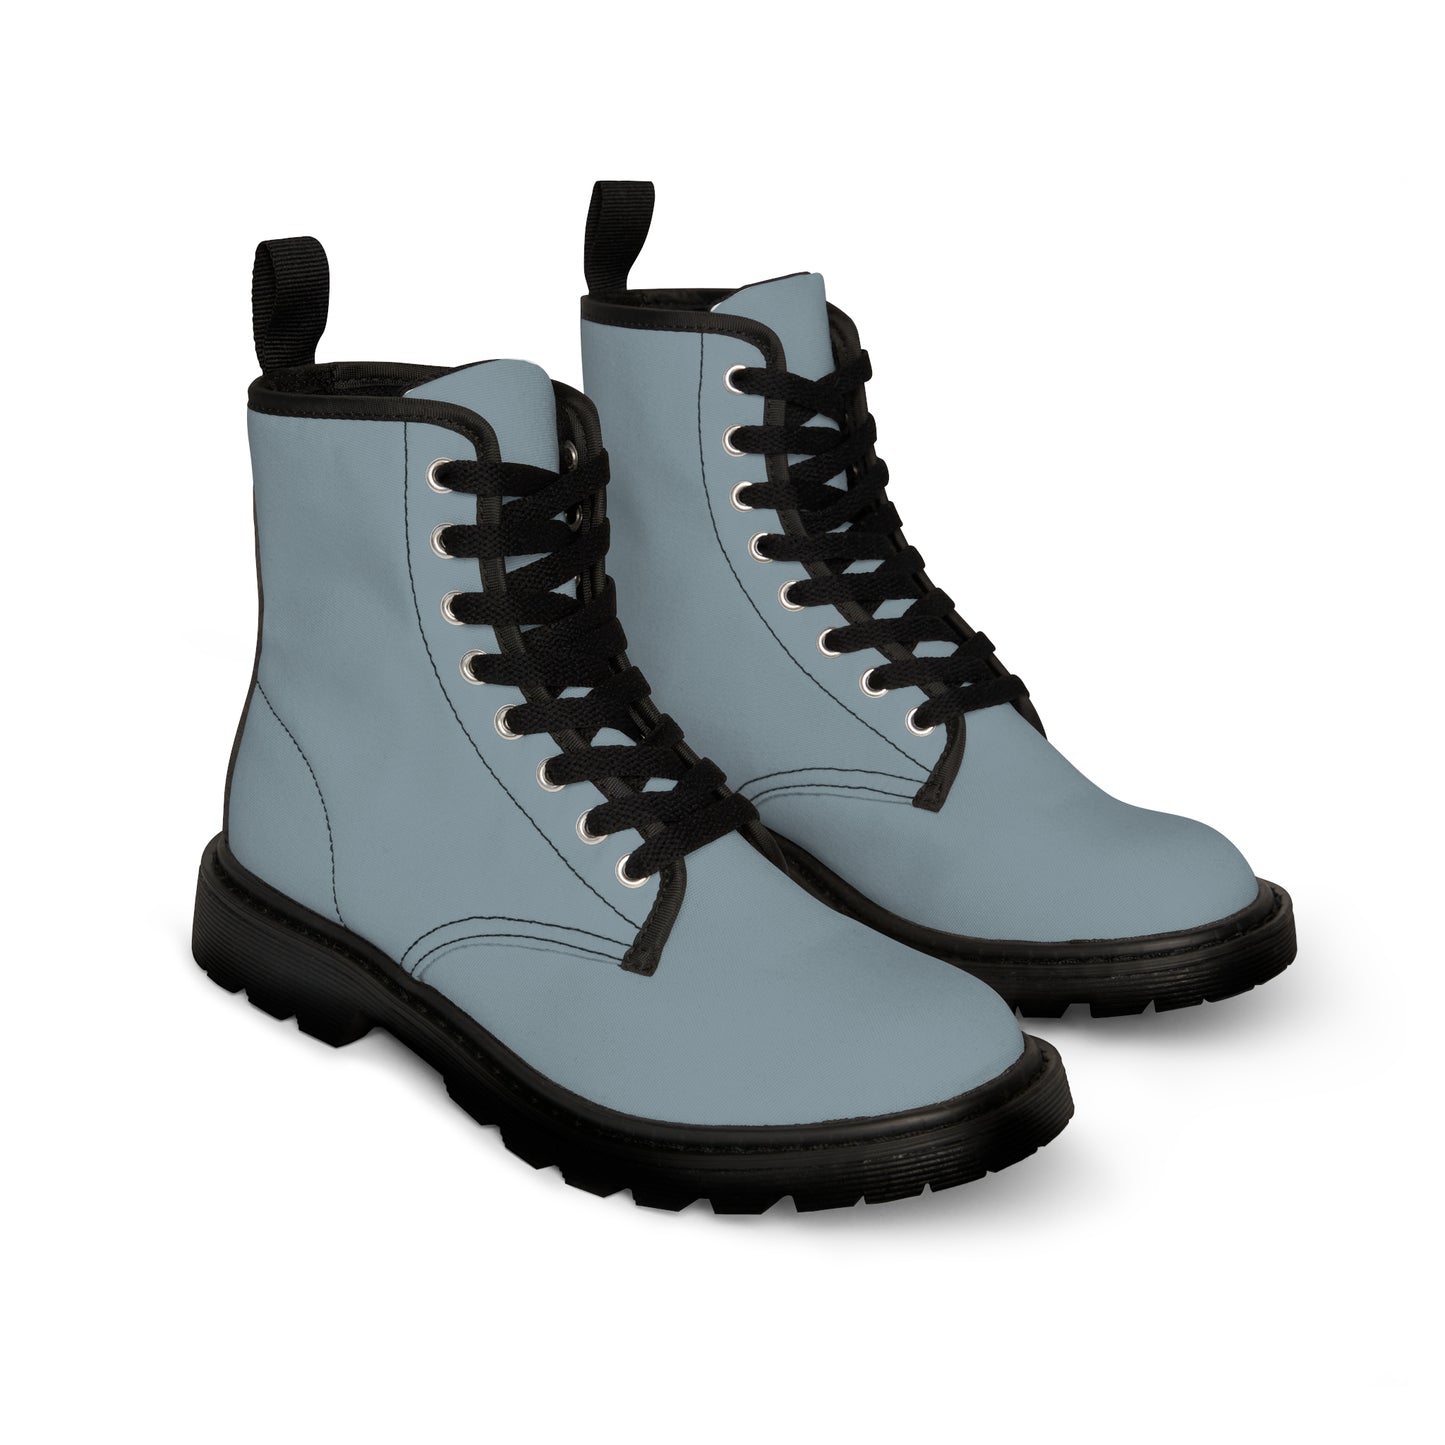 Women's Canvas Boots - Storm Gray US 11 Black sole